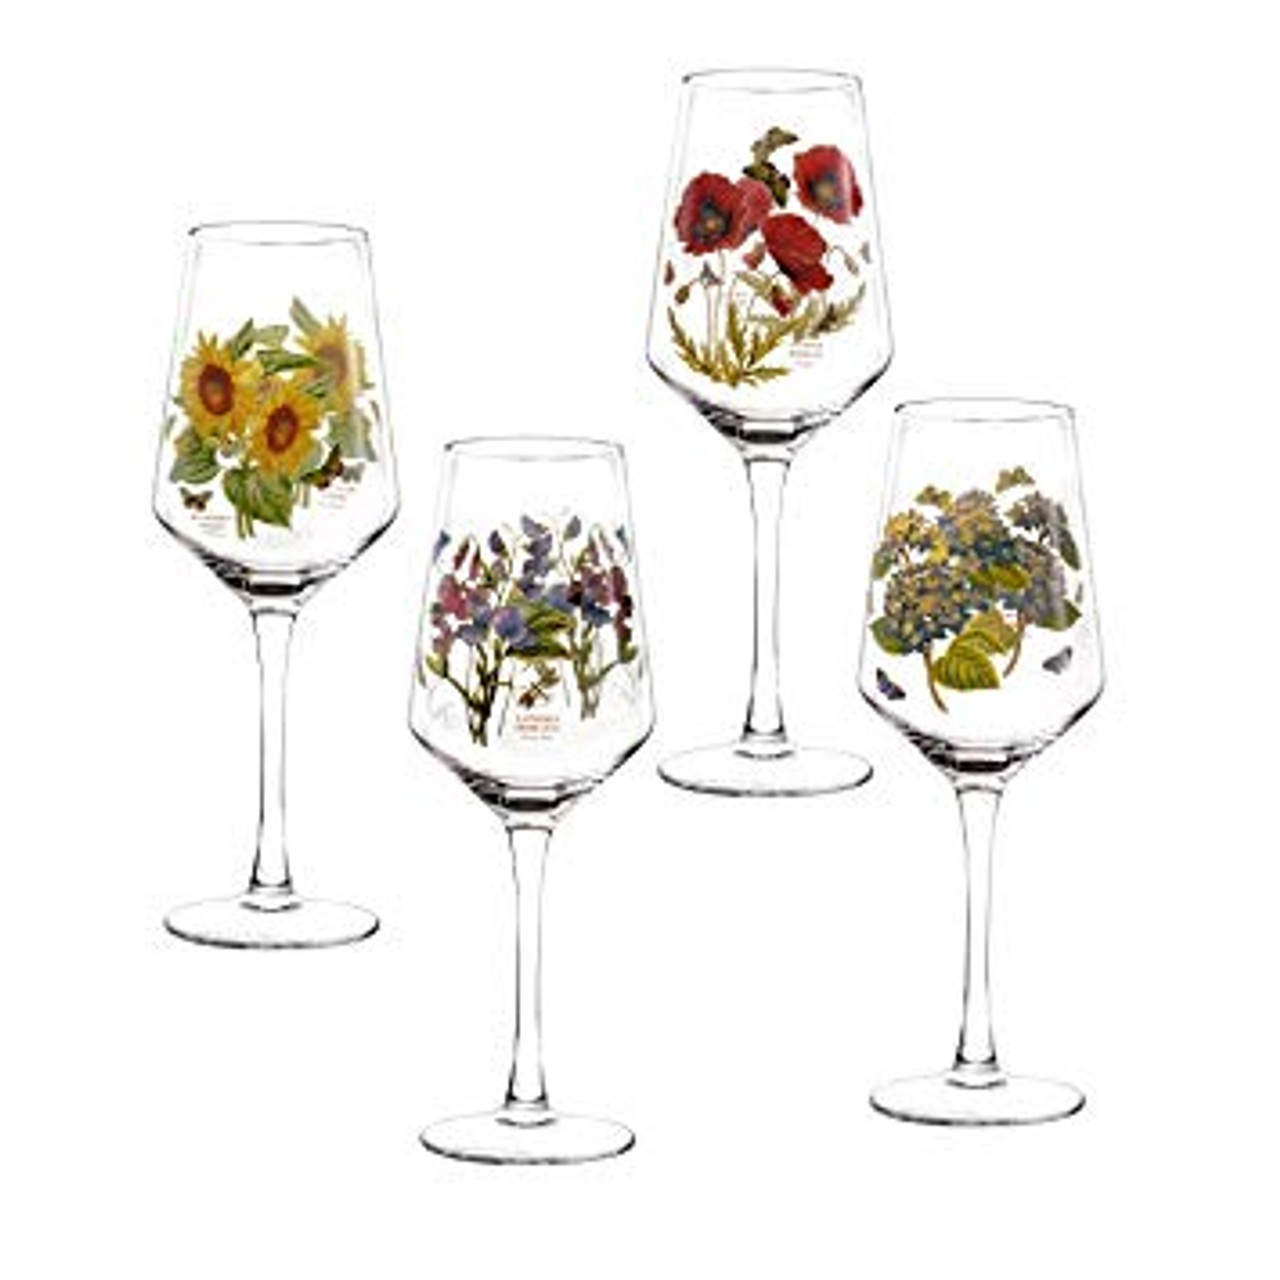 Hydrangea Stemless Wine Glasses